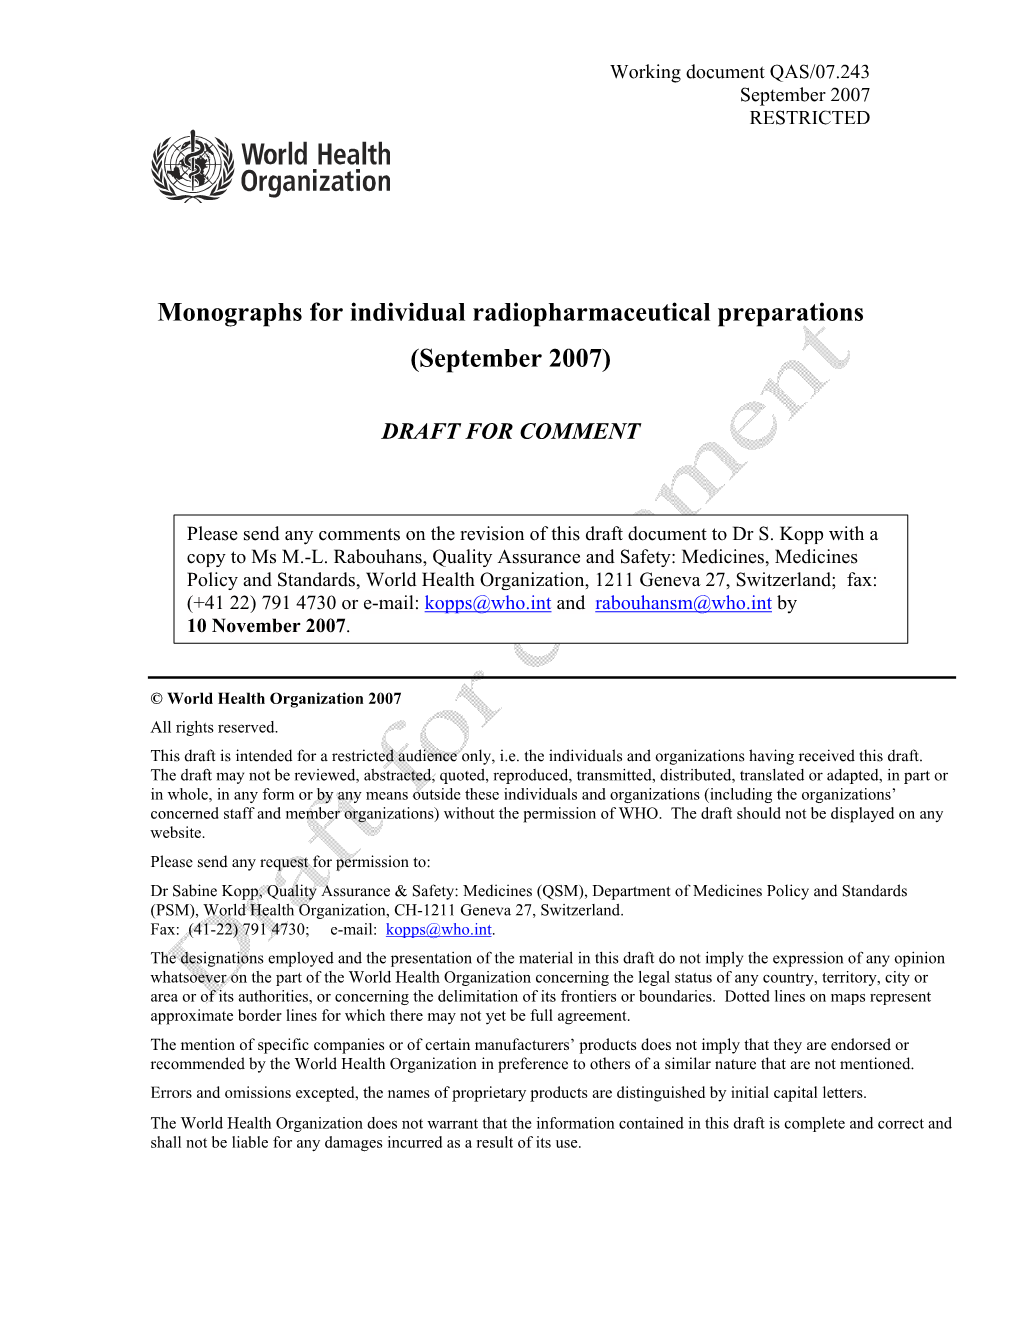 Monographs for Individual Radiopharmaceutical Preparations (September 2007)